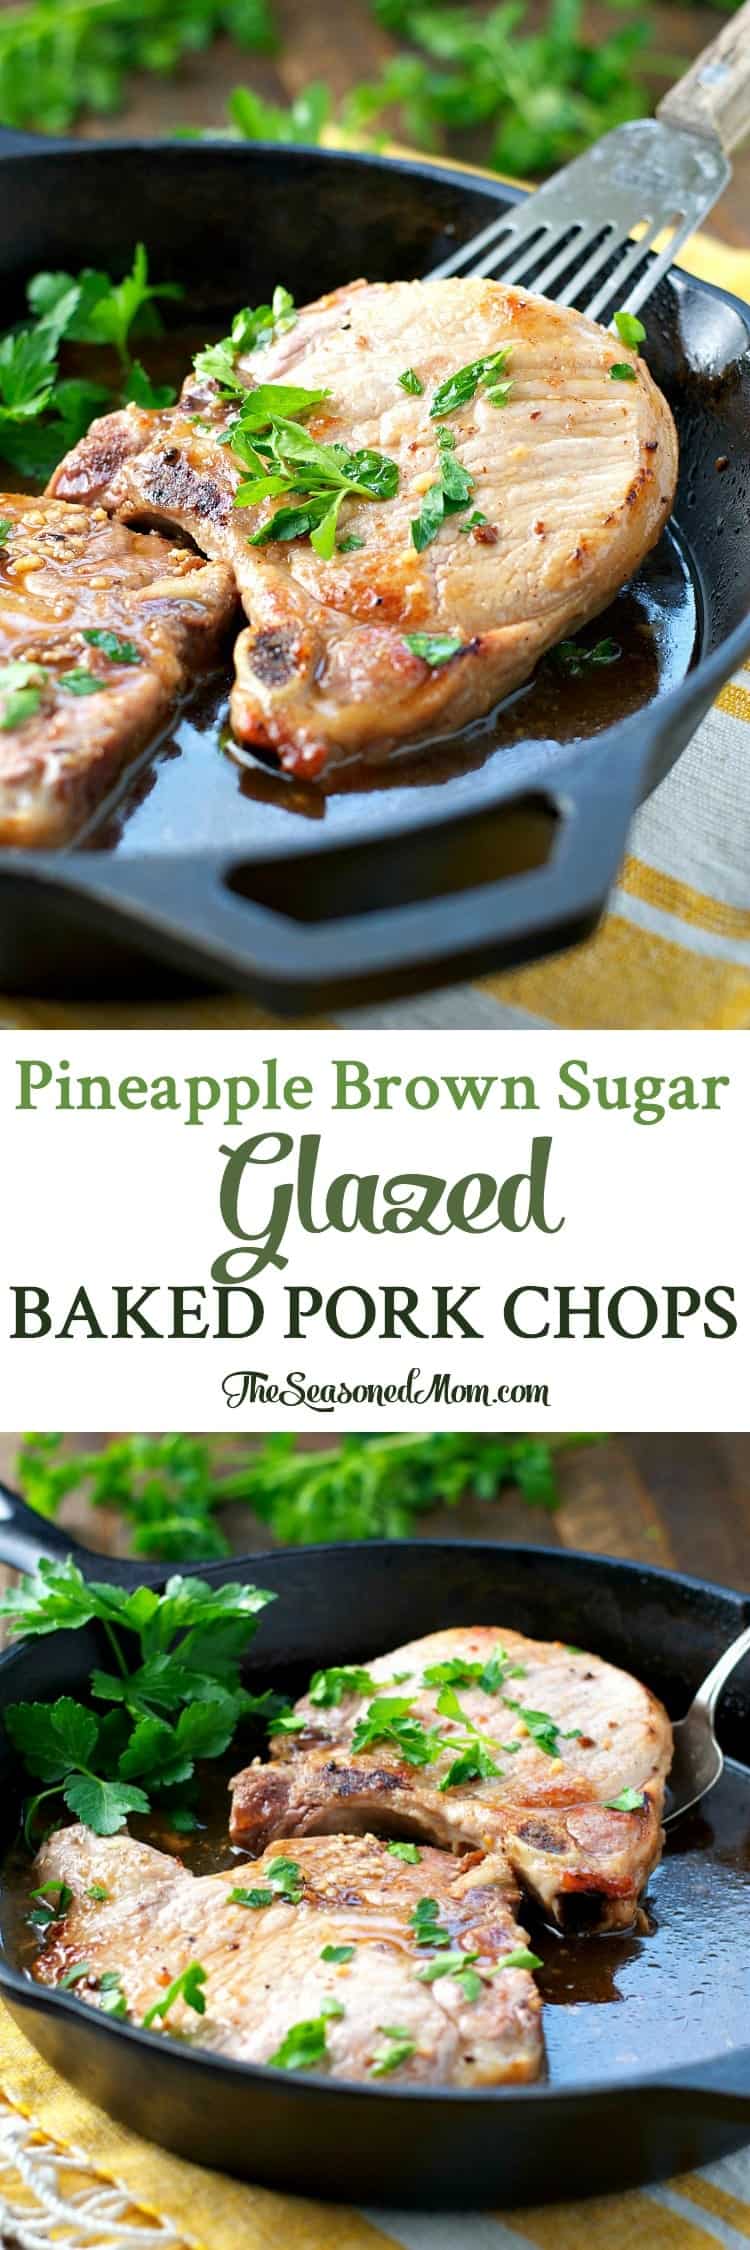 Pineapple Brown Sugar Glazed Baked Pork Chops - The Seasoned Mom